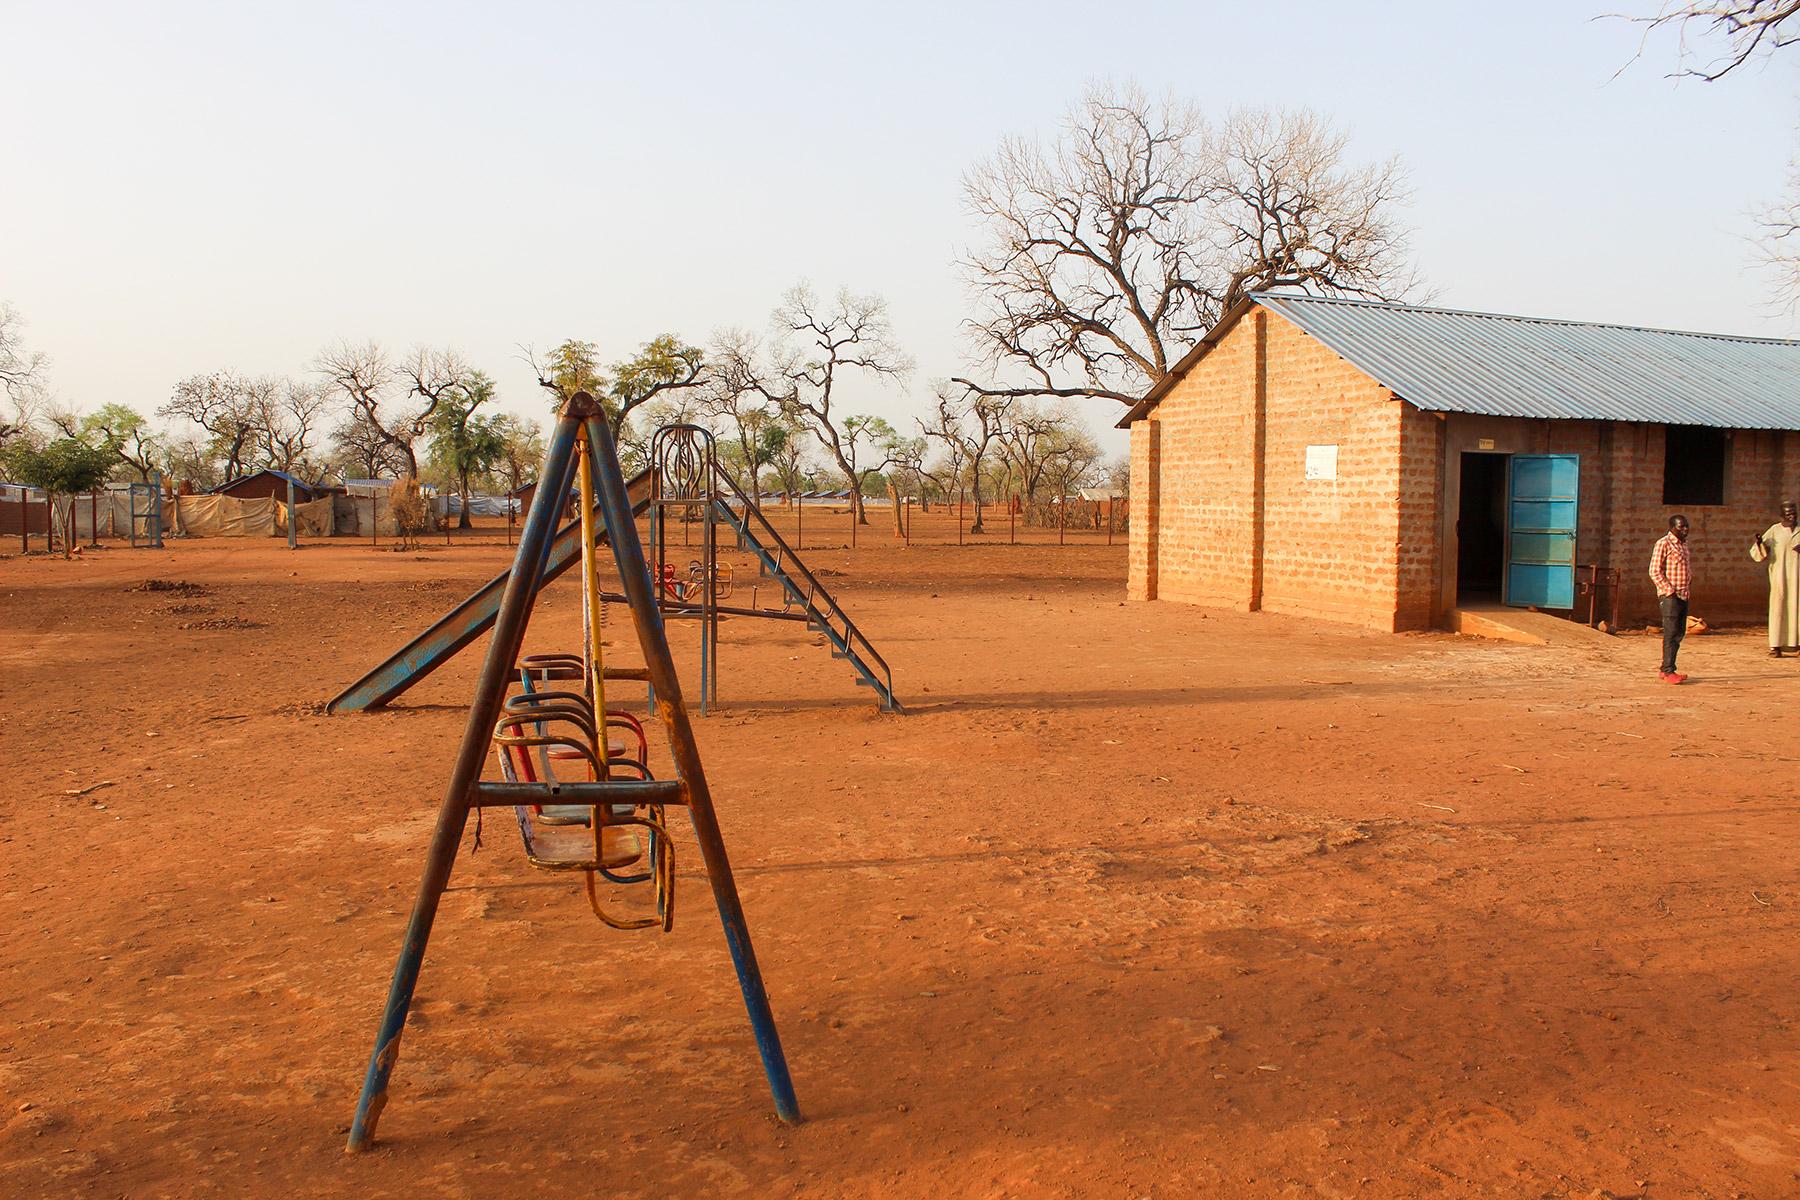 Tirhaka ALP Center in South Sudan